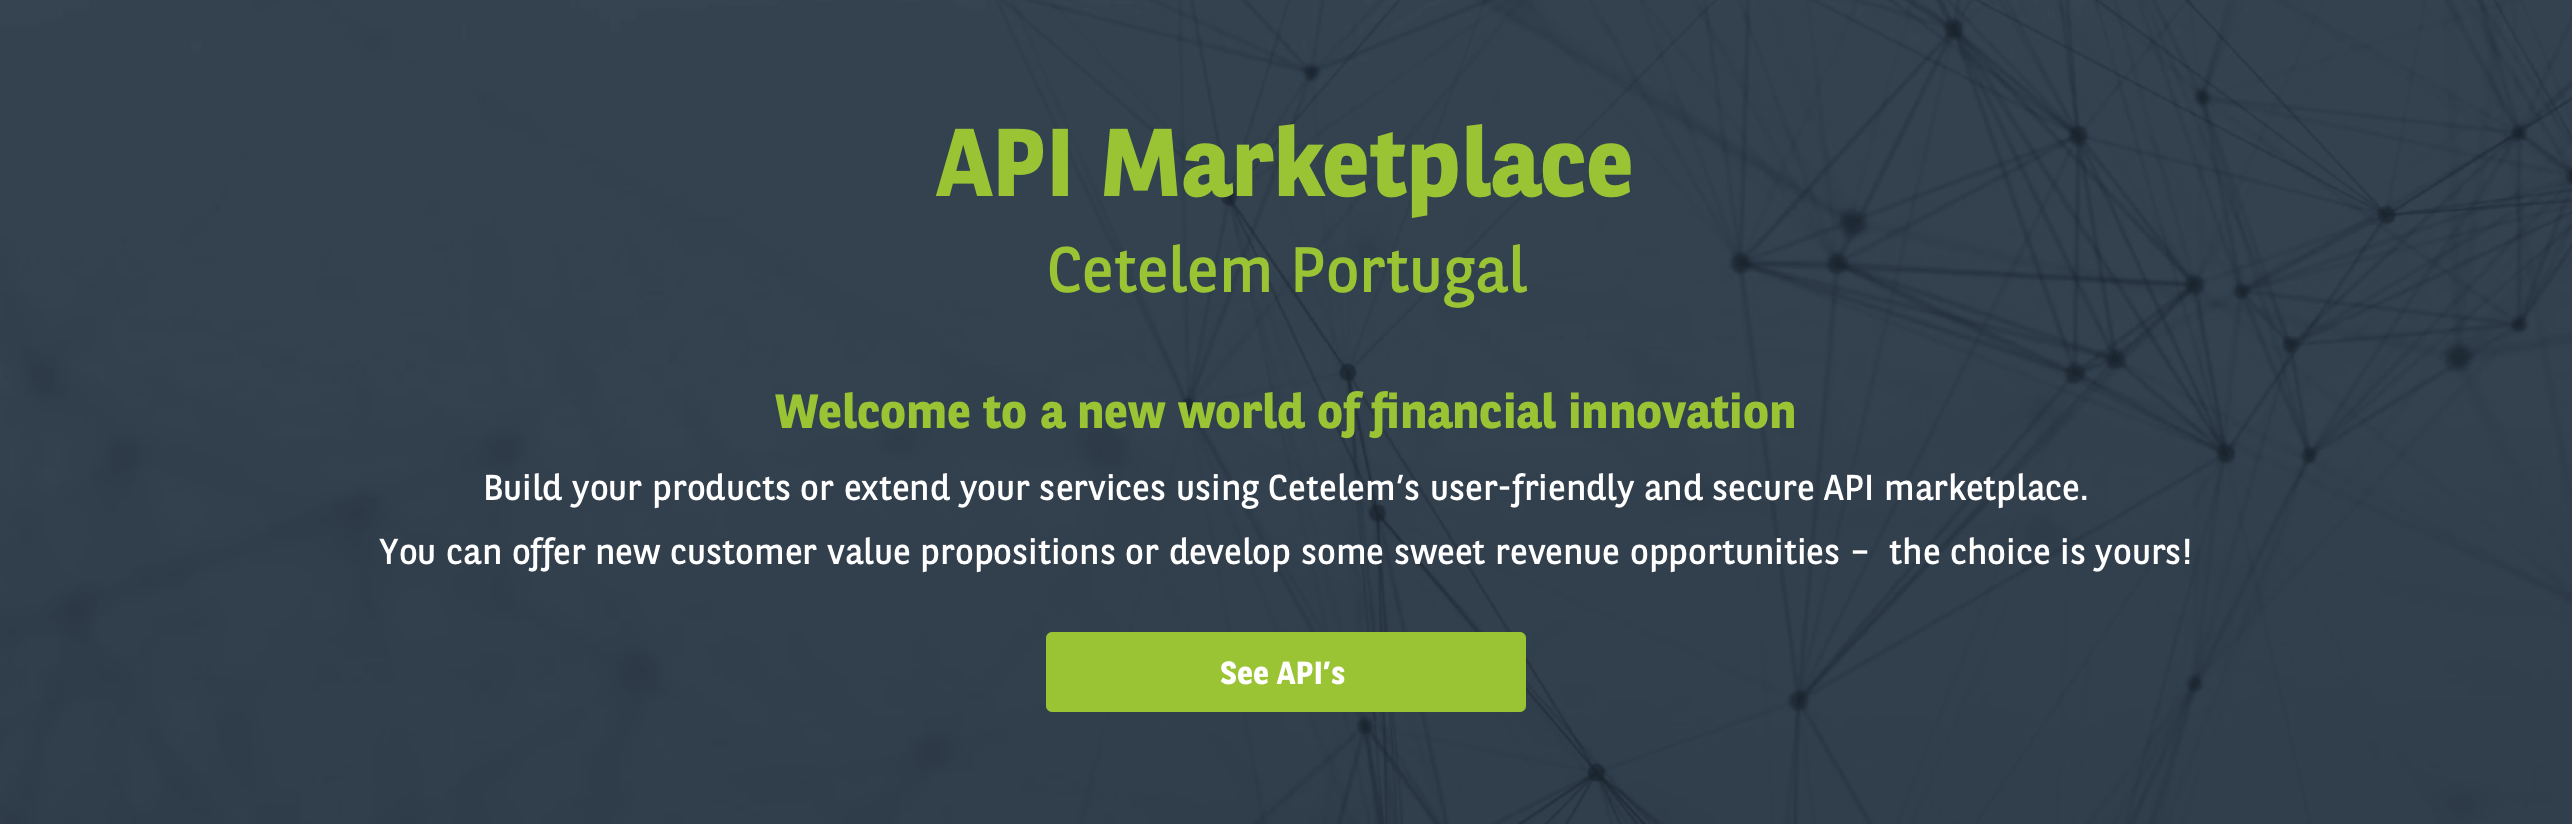 API Marketplace by Cetelem Portugal